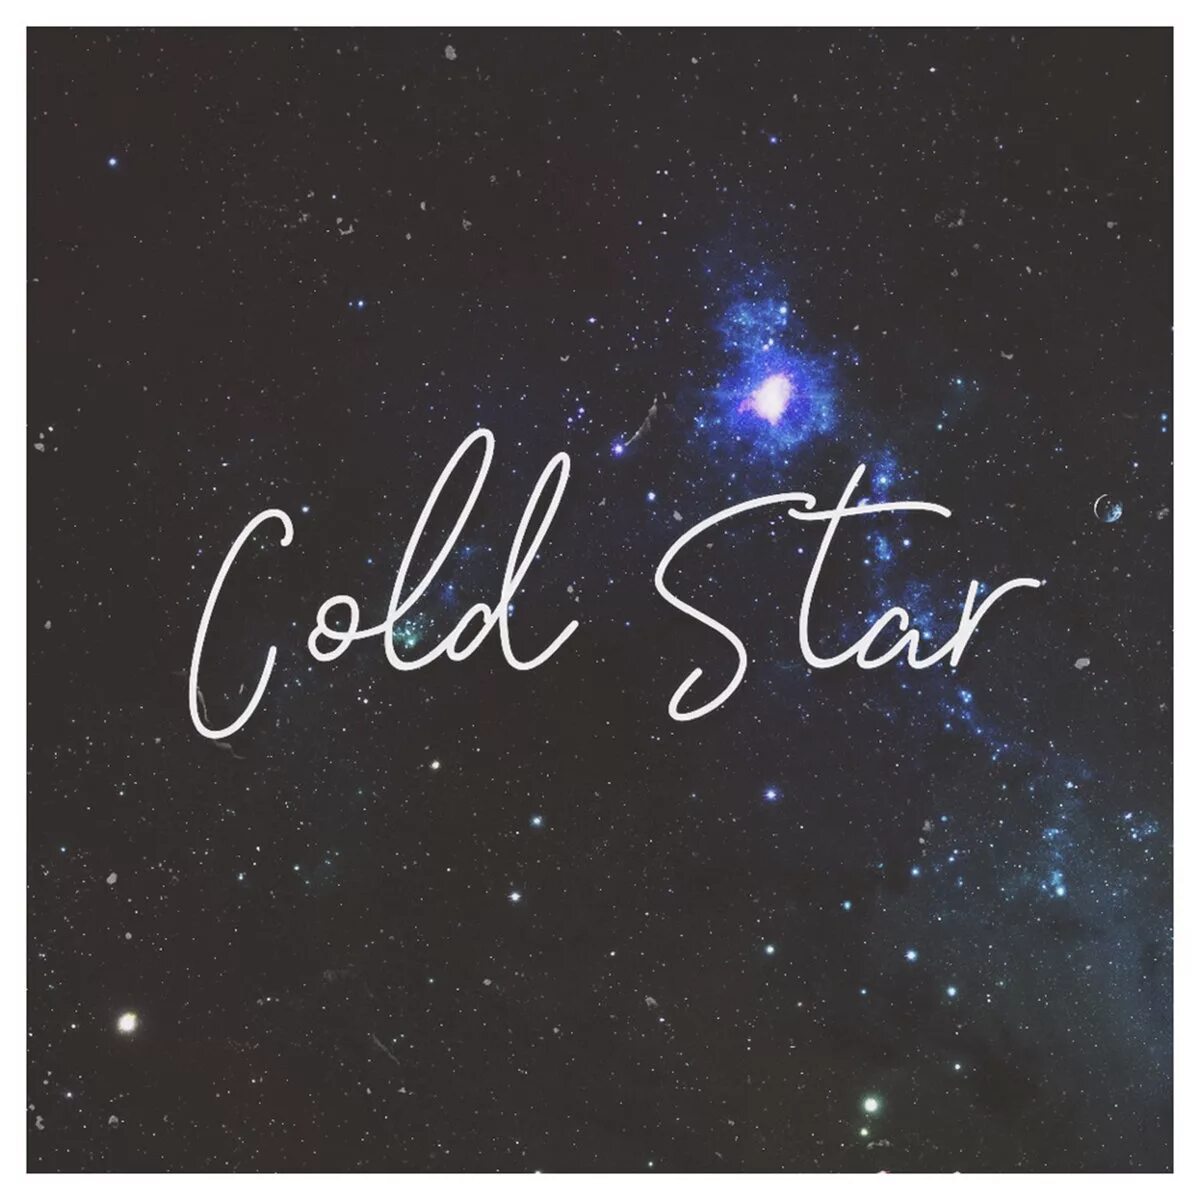 Star Kids album. Mr Star песня. Cold Star 100. Cold star